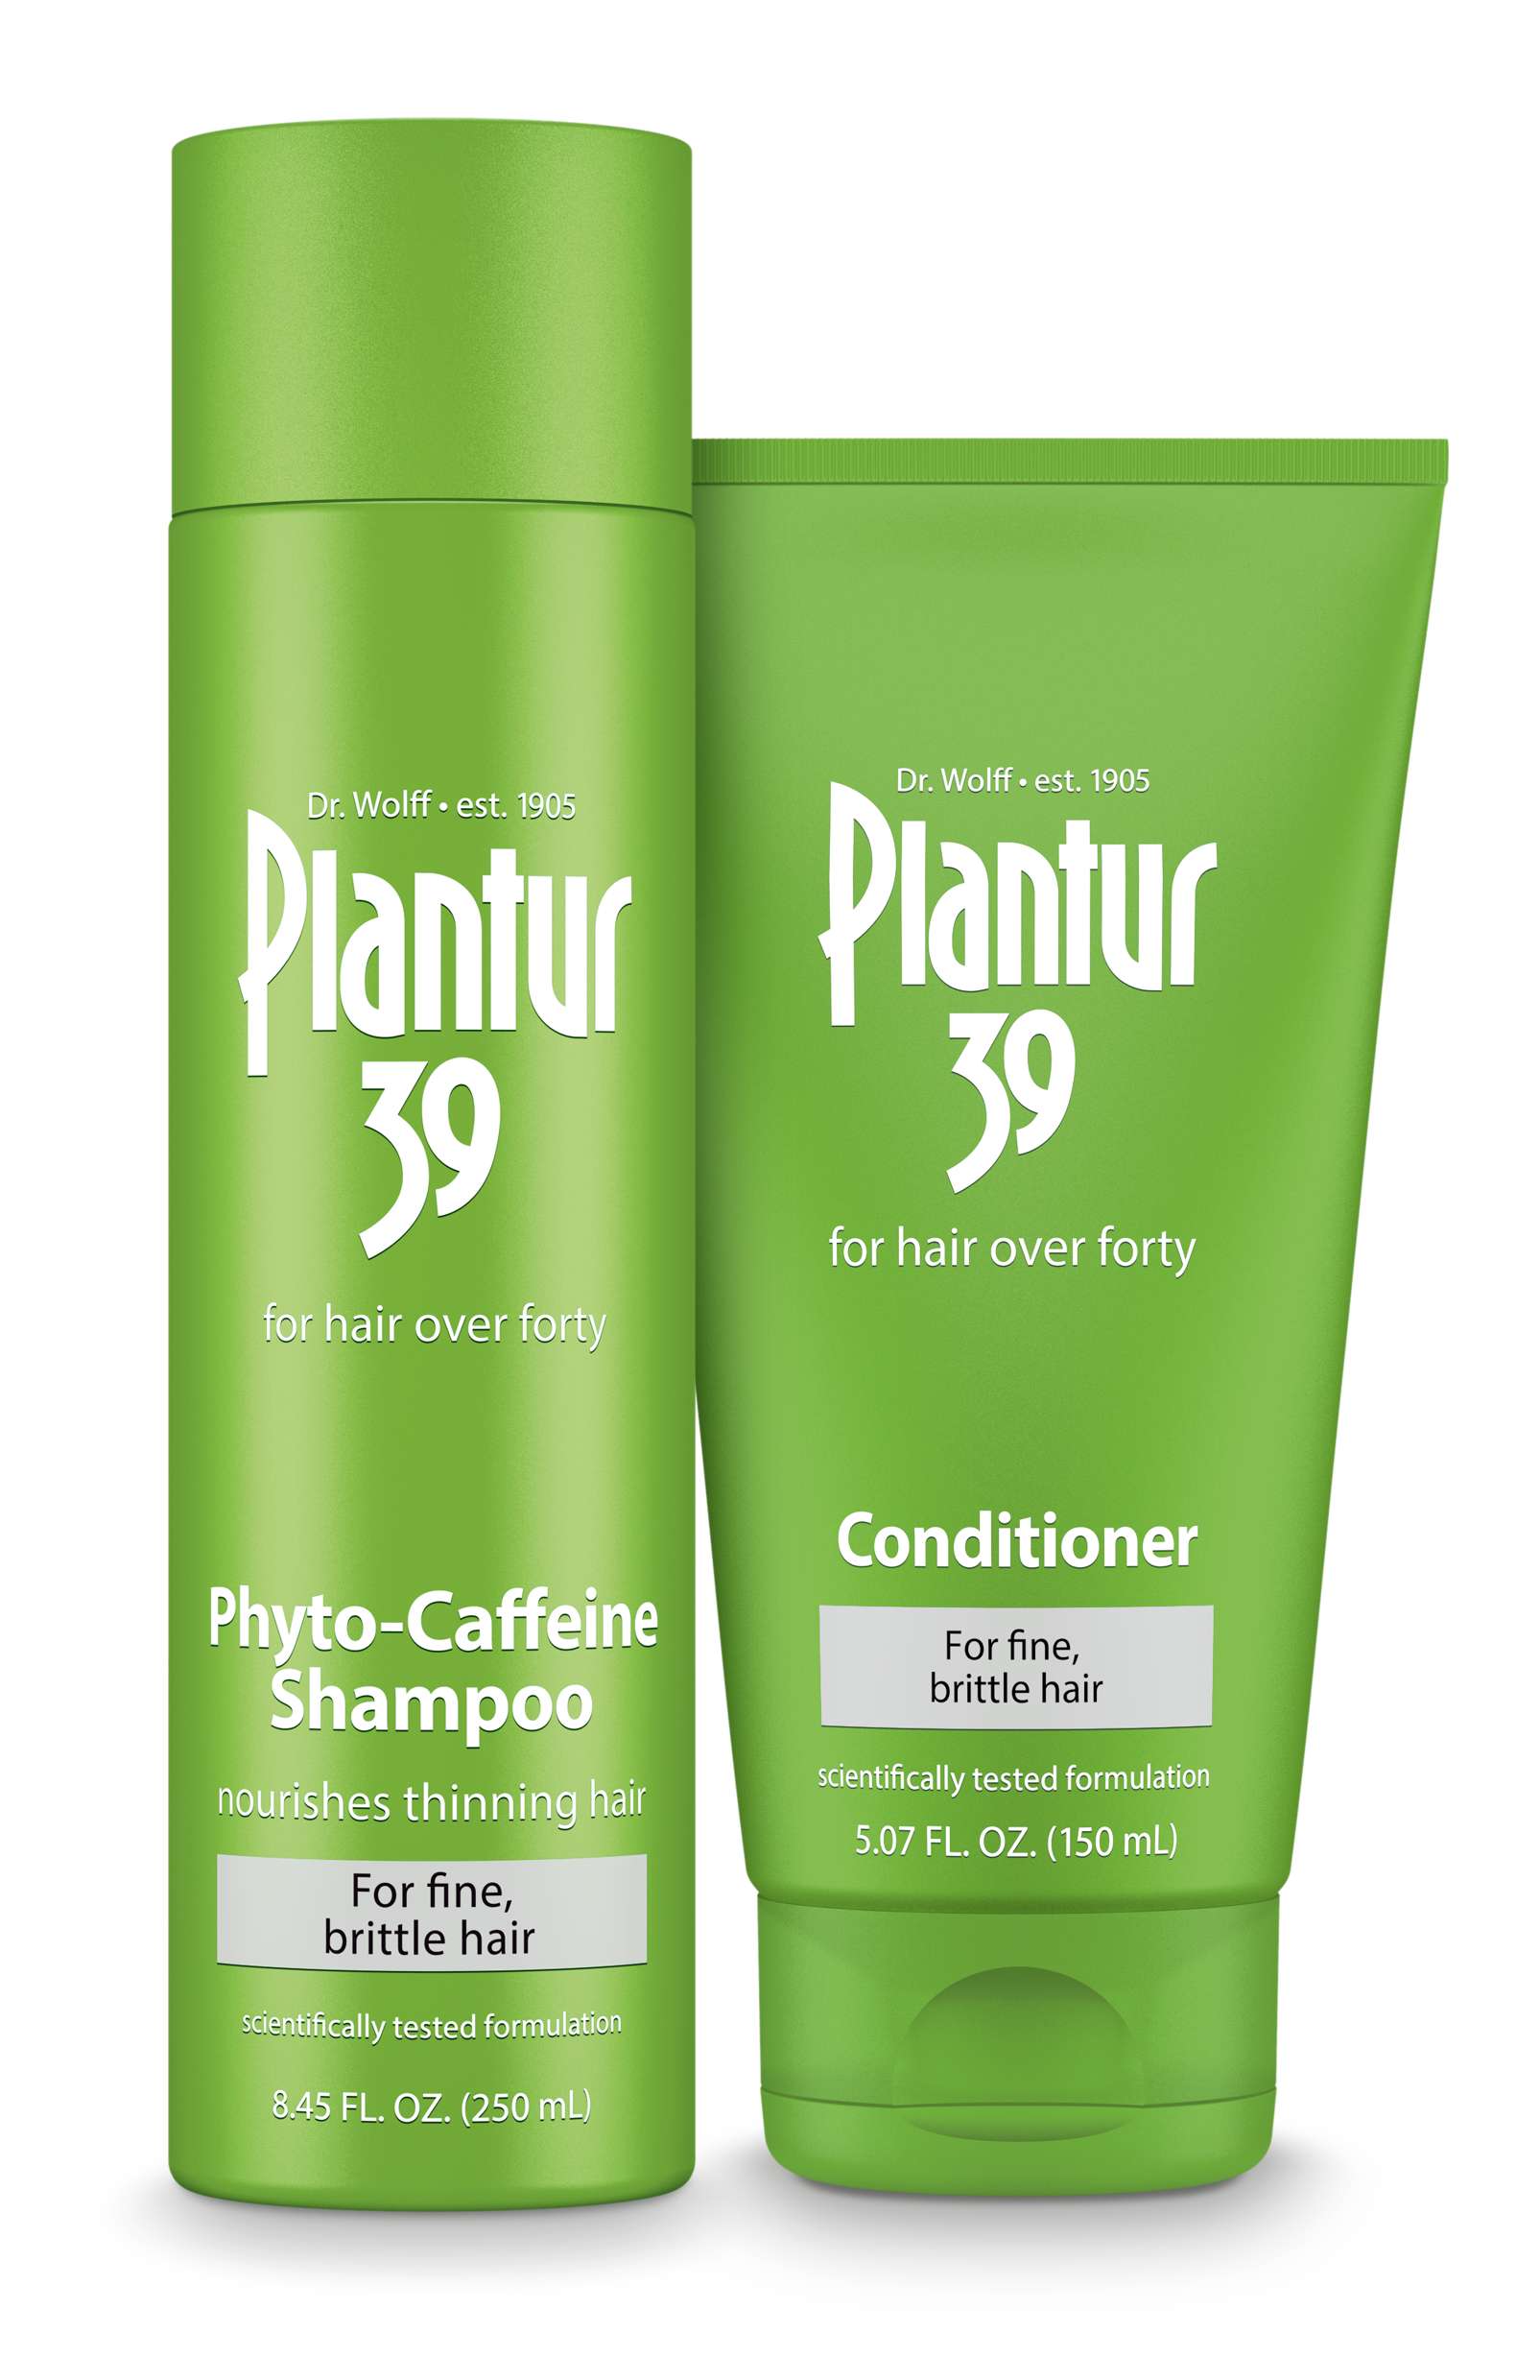 Plantur 39 Phyto